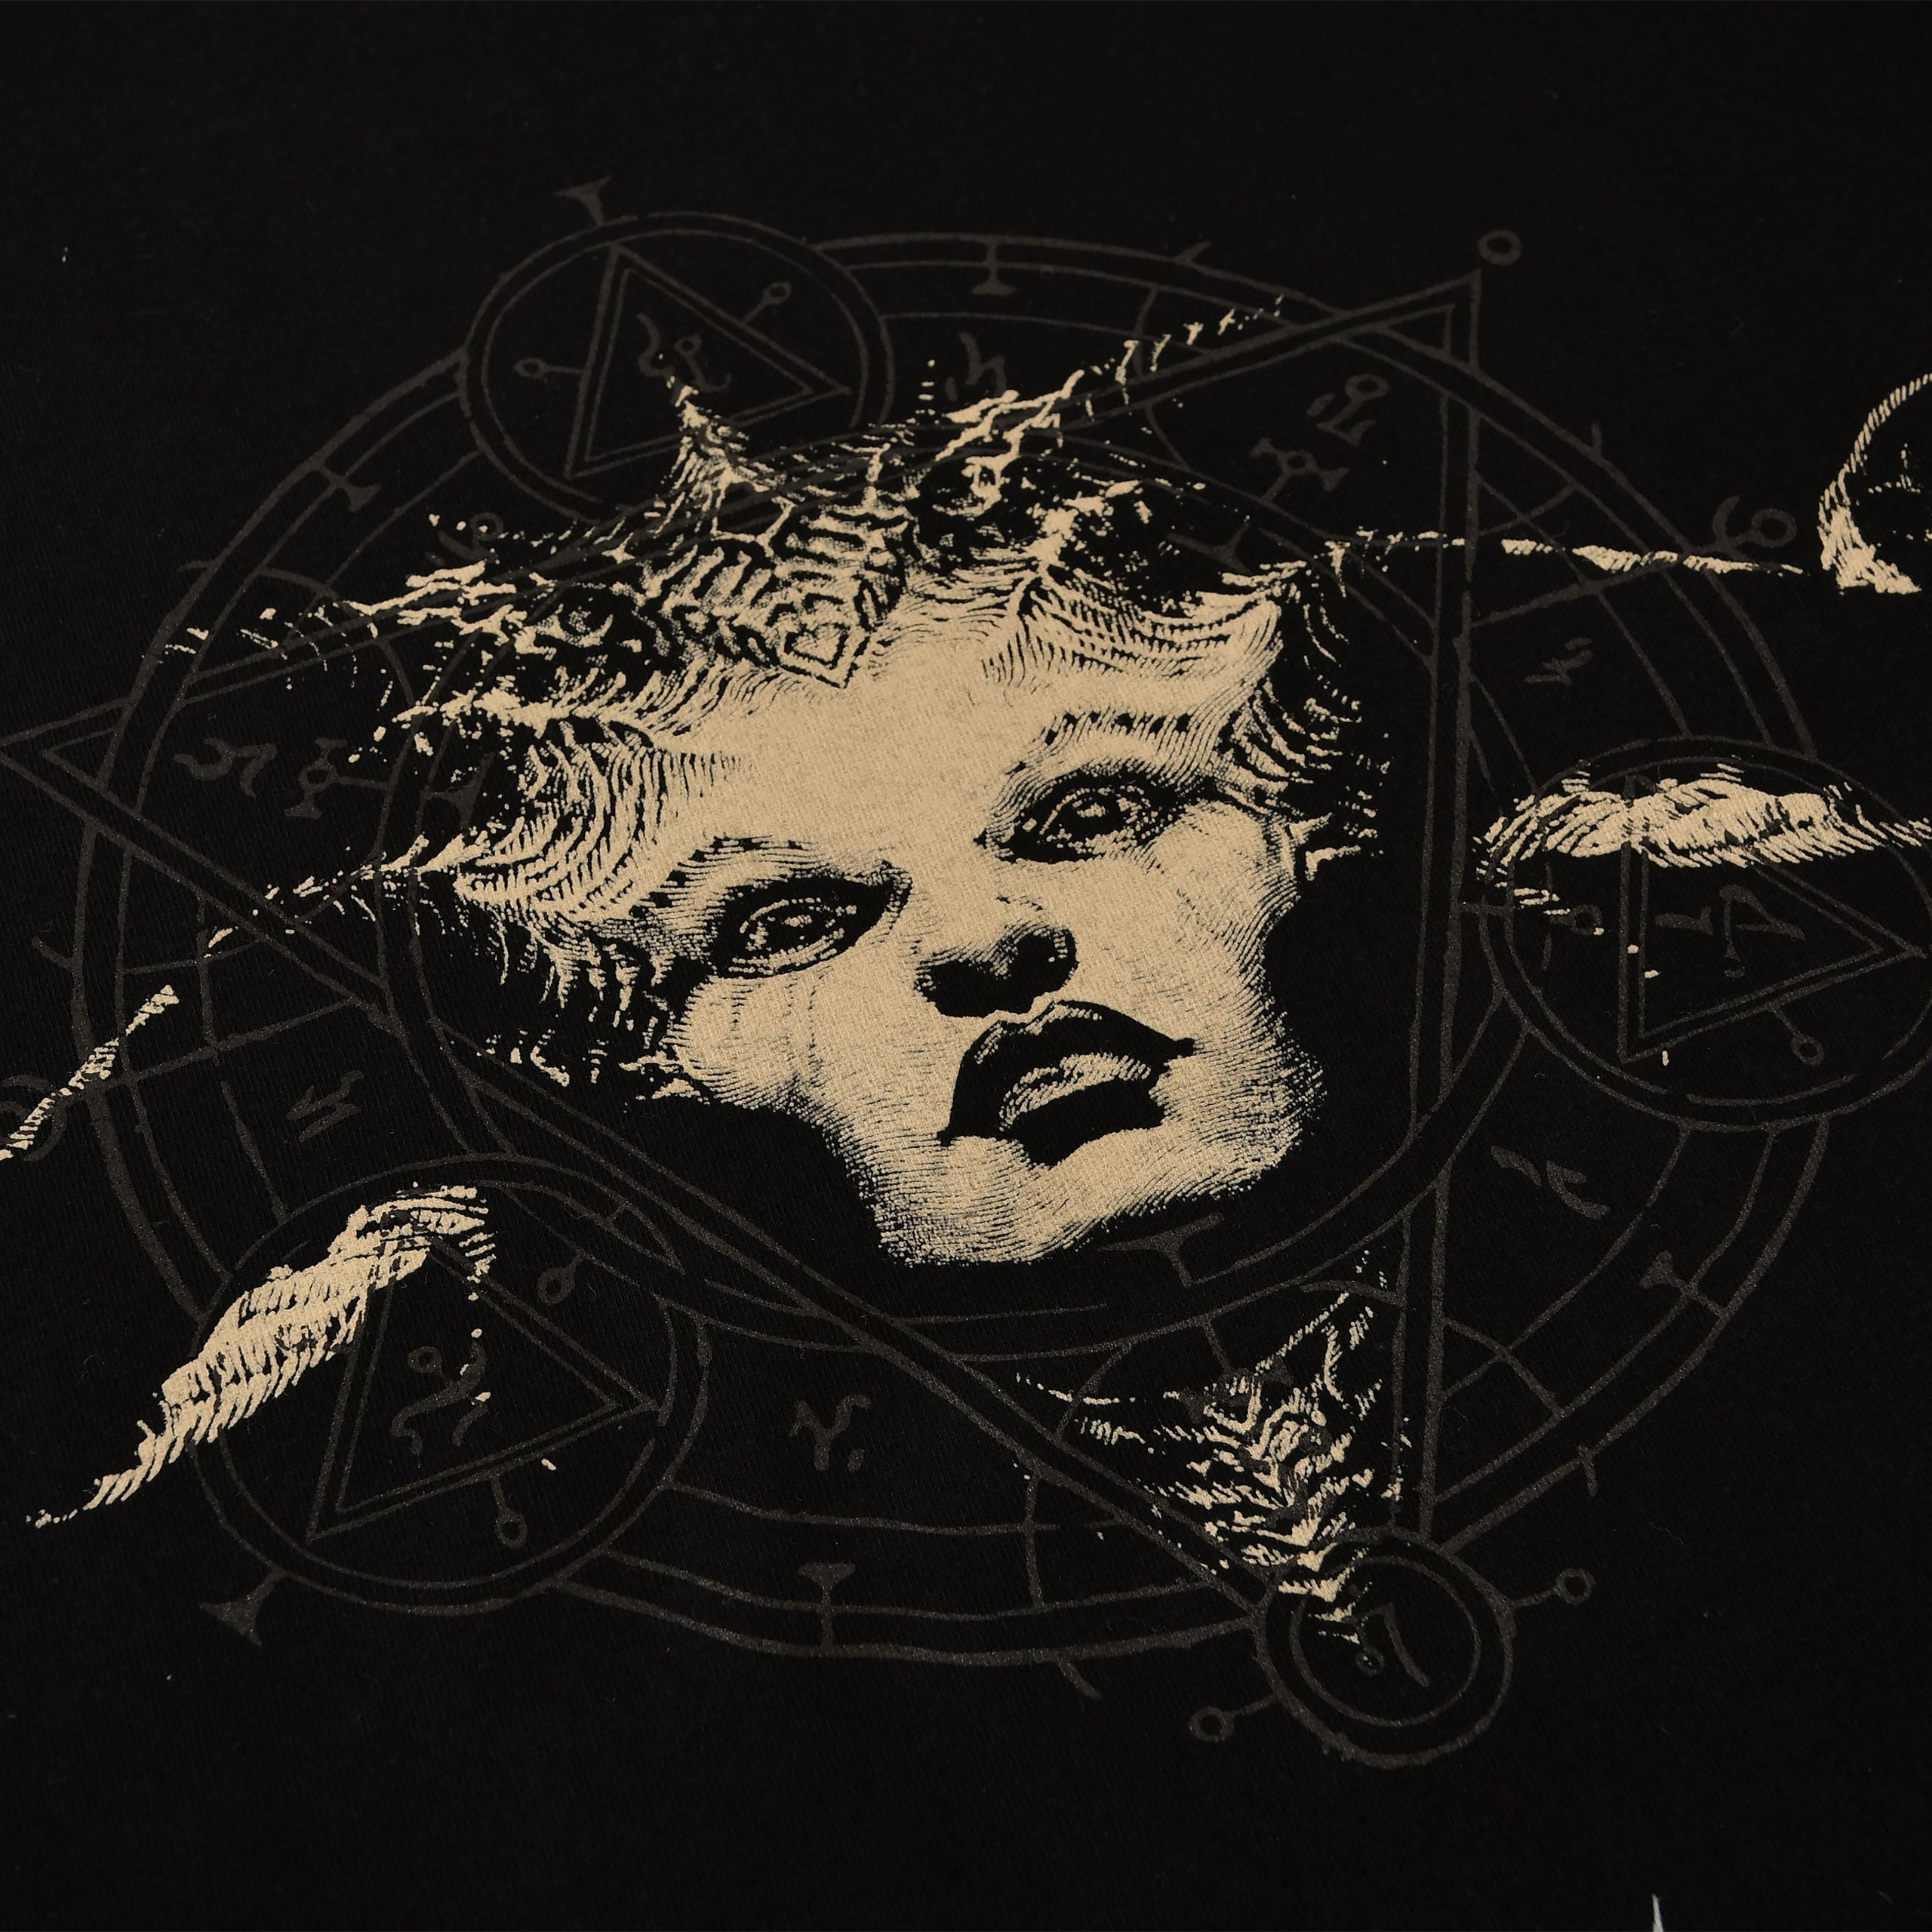 Diablo IV - Queen of the Damned T-Shirt schwarz